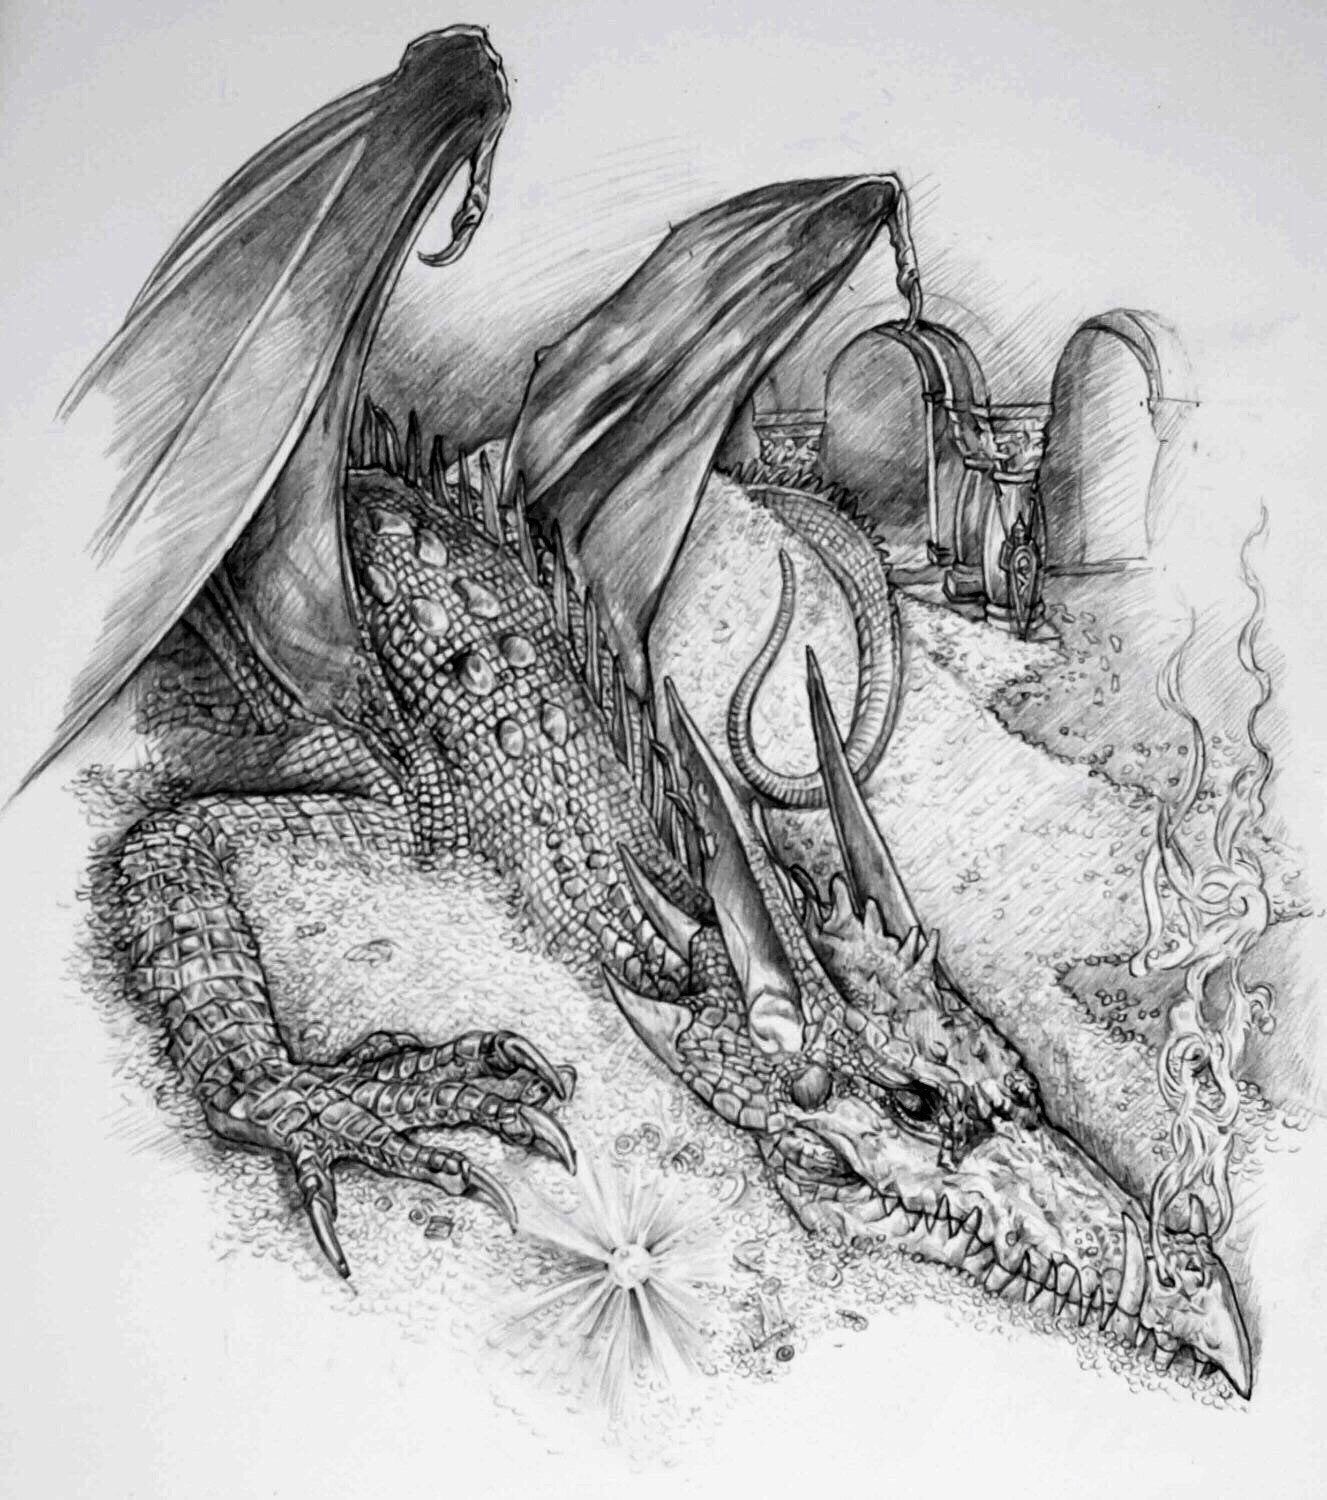 the hobbit smaug drawing